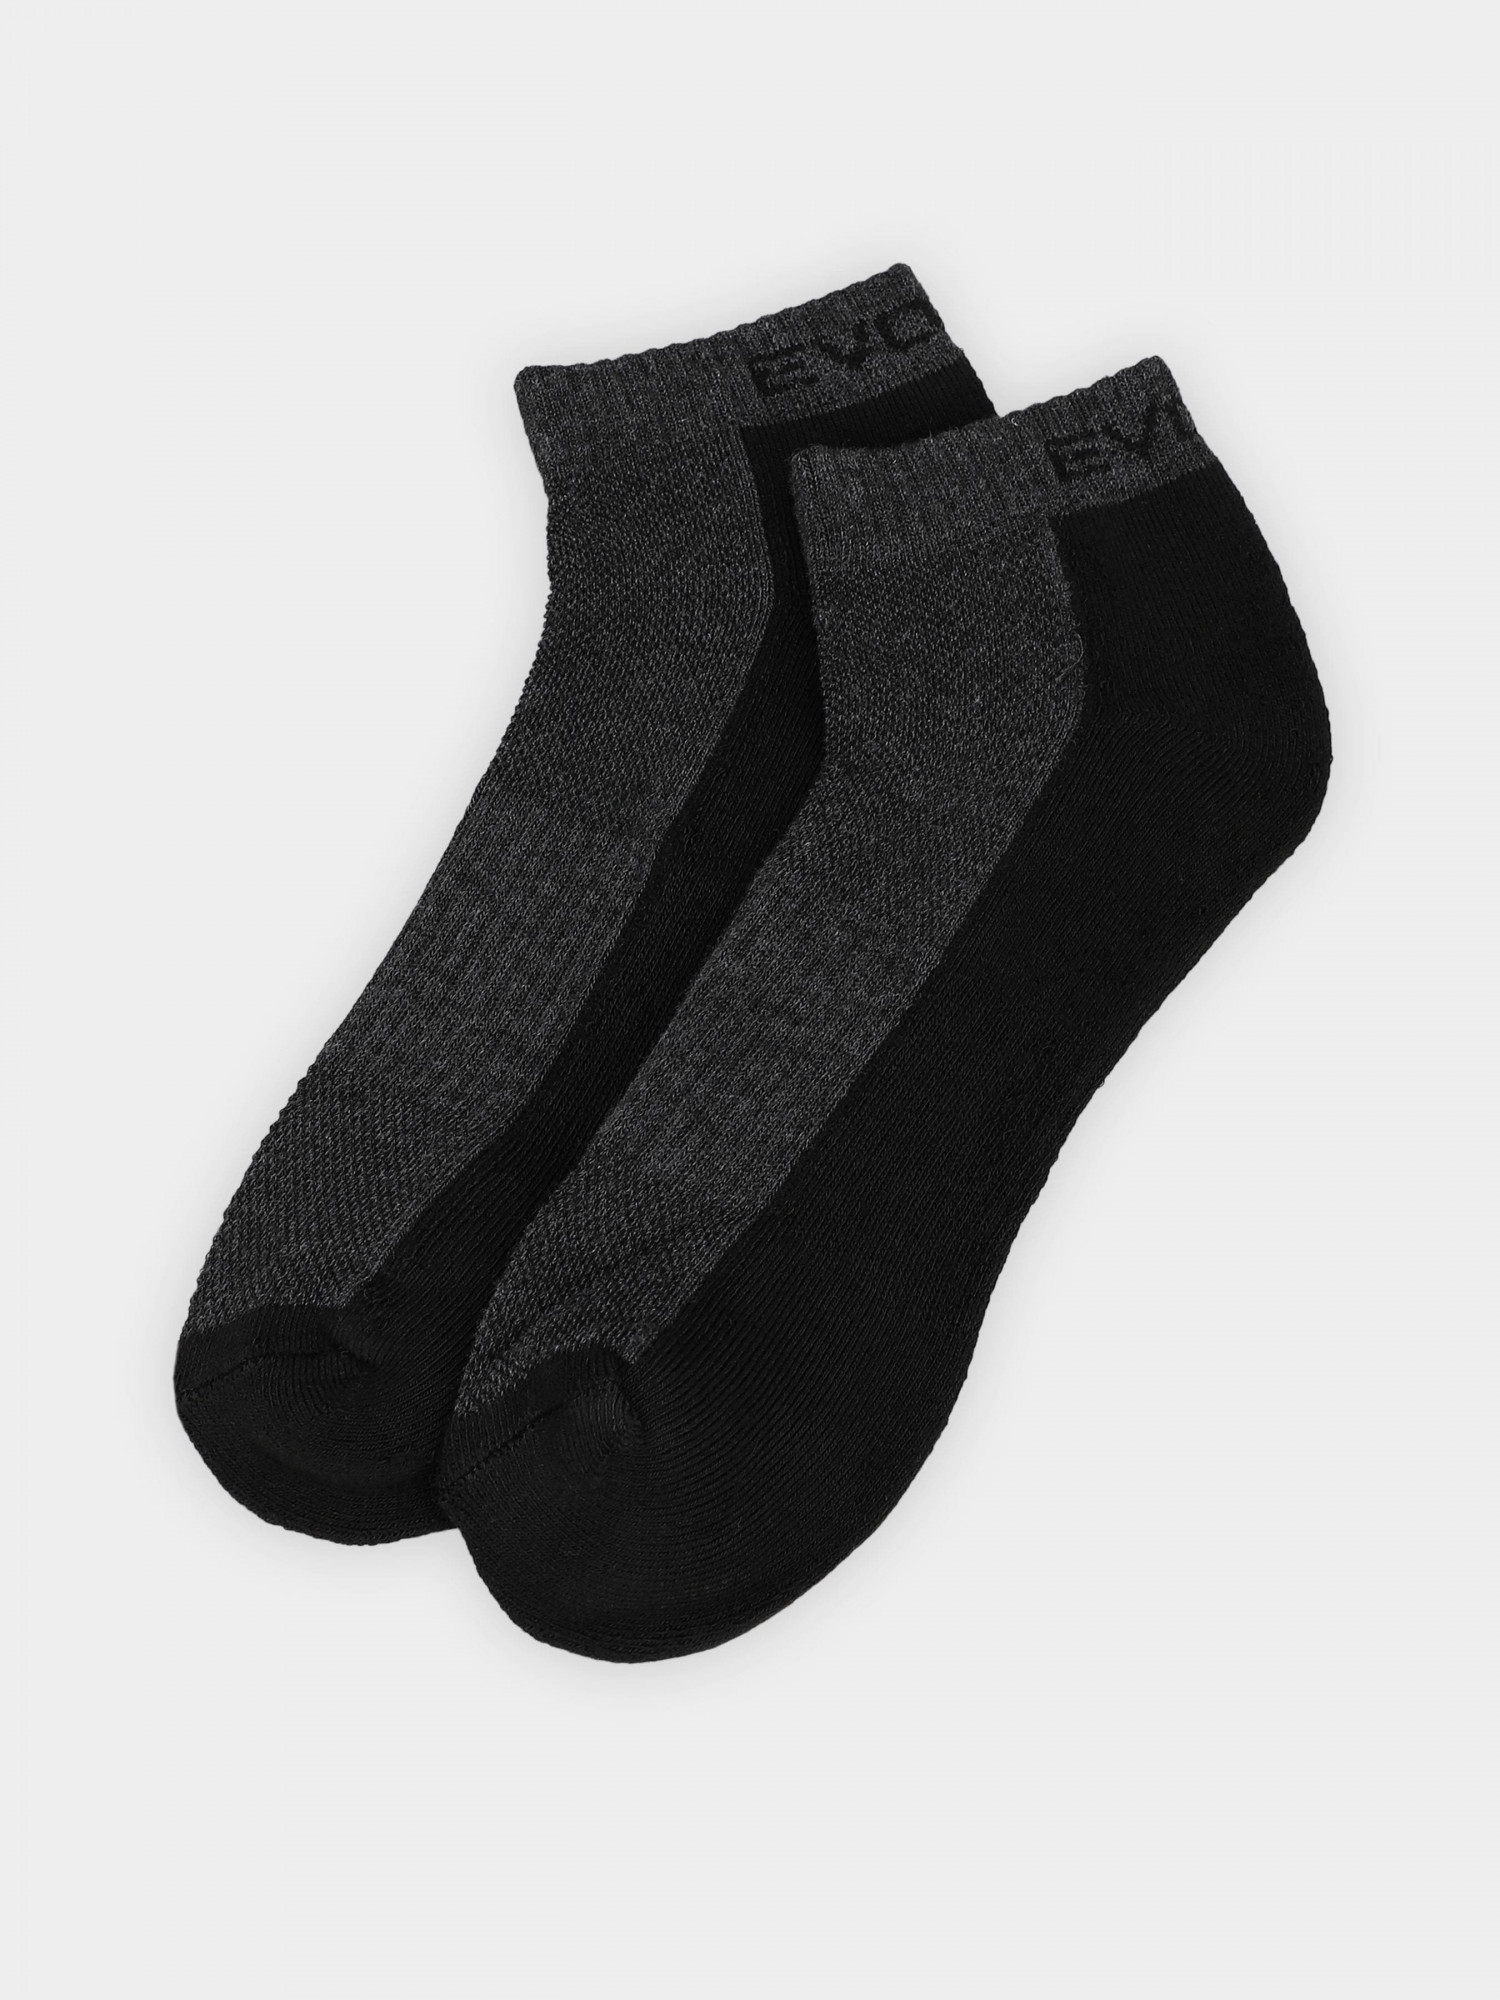 Шкарпетки Evoids Pico чорні 999004-010 изображение 5